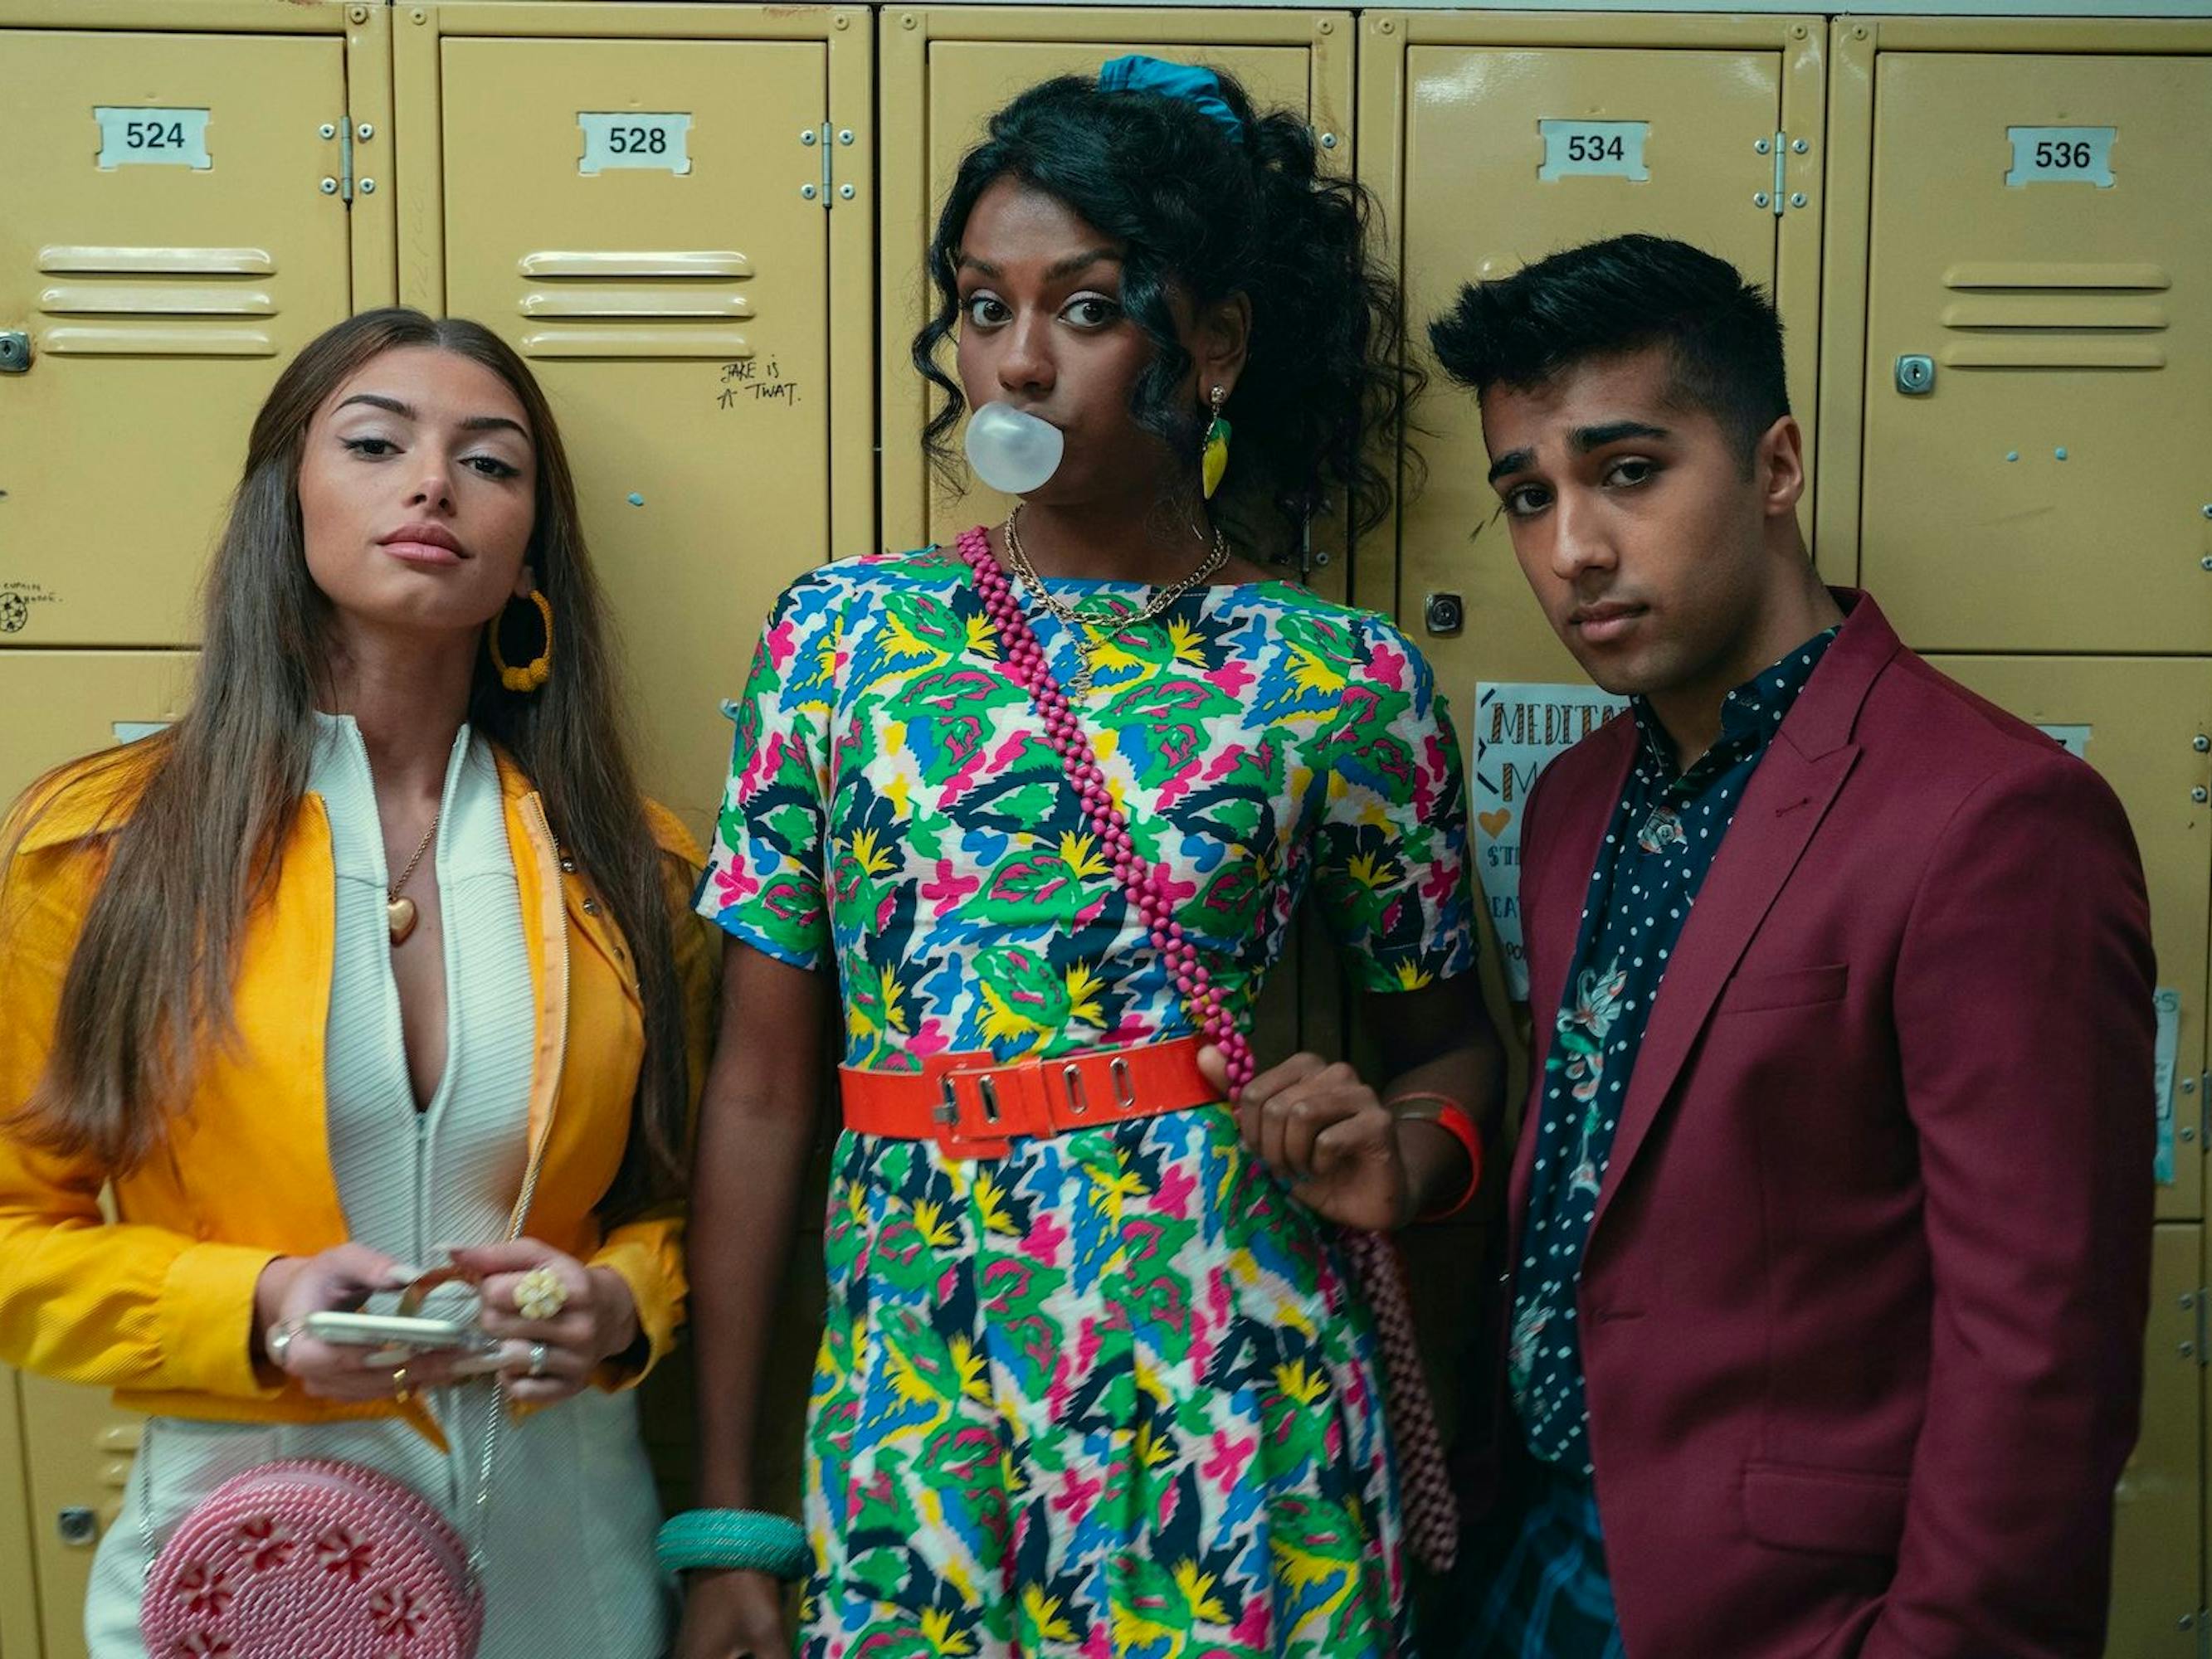 Ruby Matthews (Mimi Keene), Olivia Hanan (Simone Ashley), and Anwar (Chaneil Kular) stand against the tan lockers look fierce and scary. Ashley blows a customary bubble.